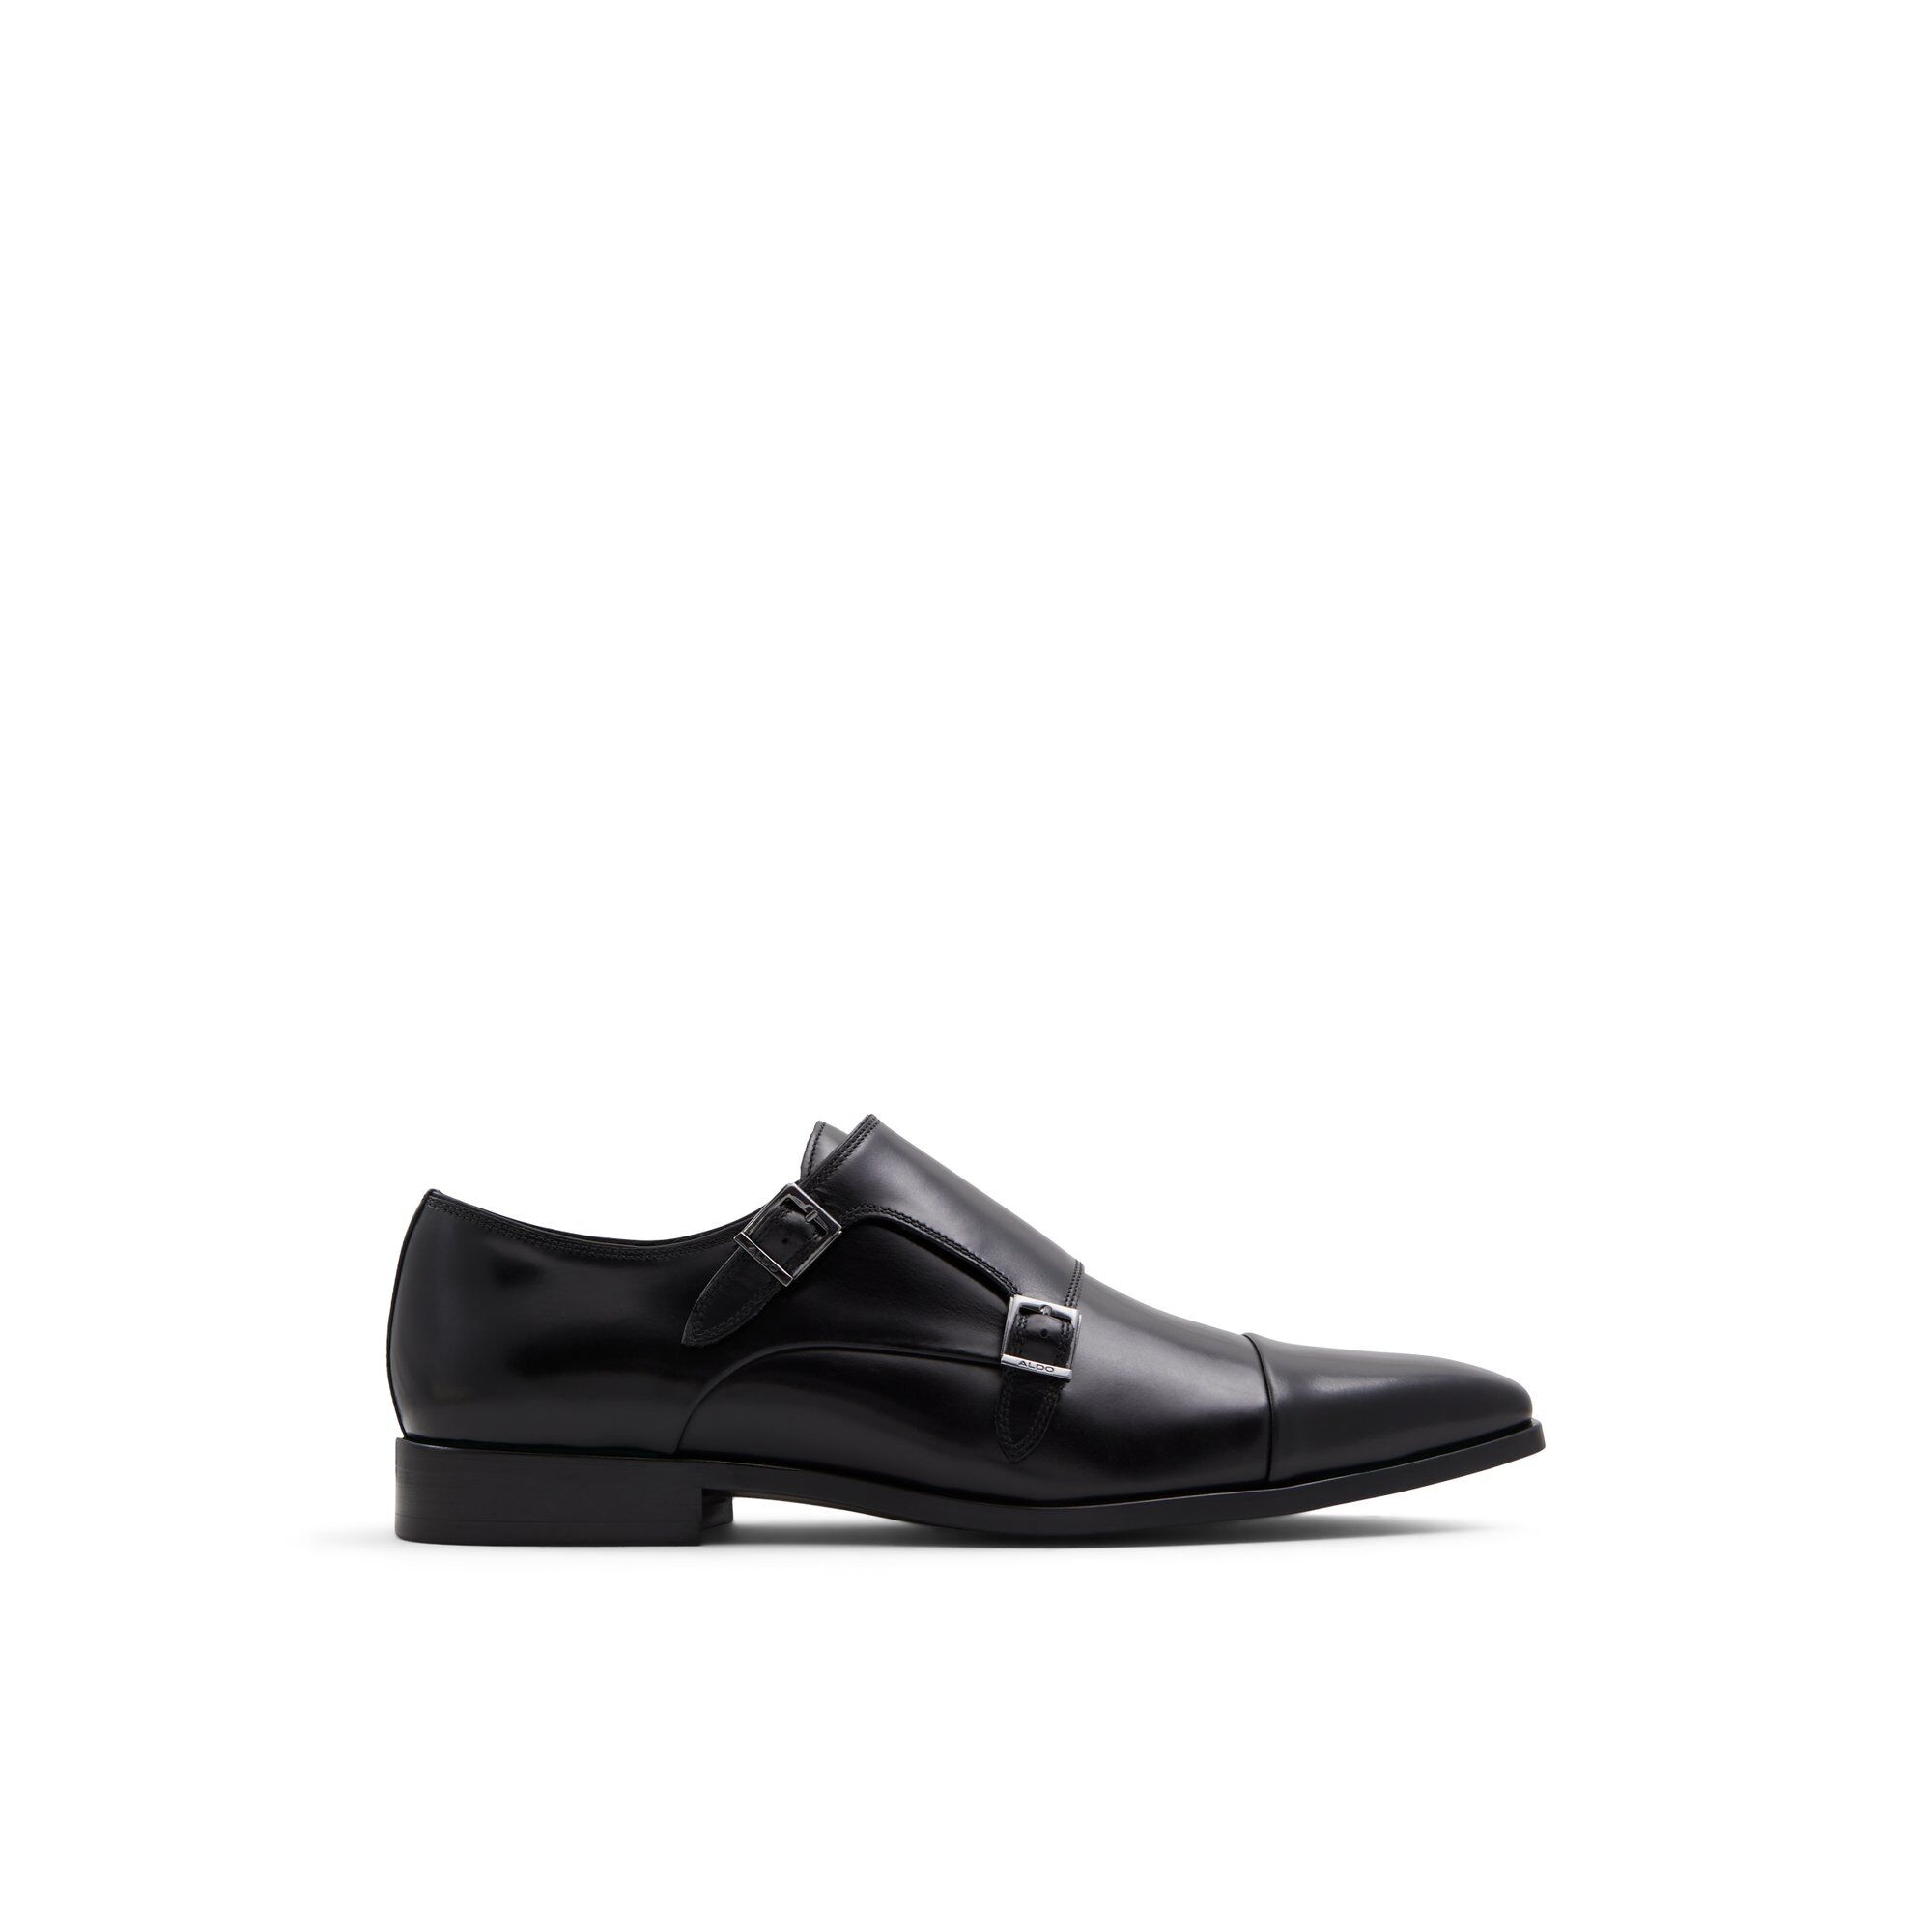 ALDO Windward - Men's Loafers and Slip on - Black, Size 9.5